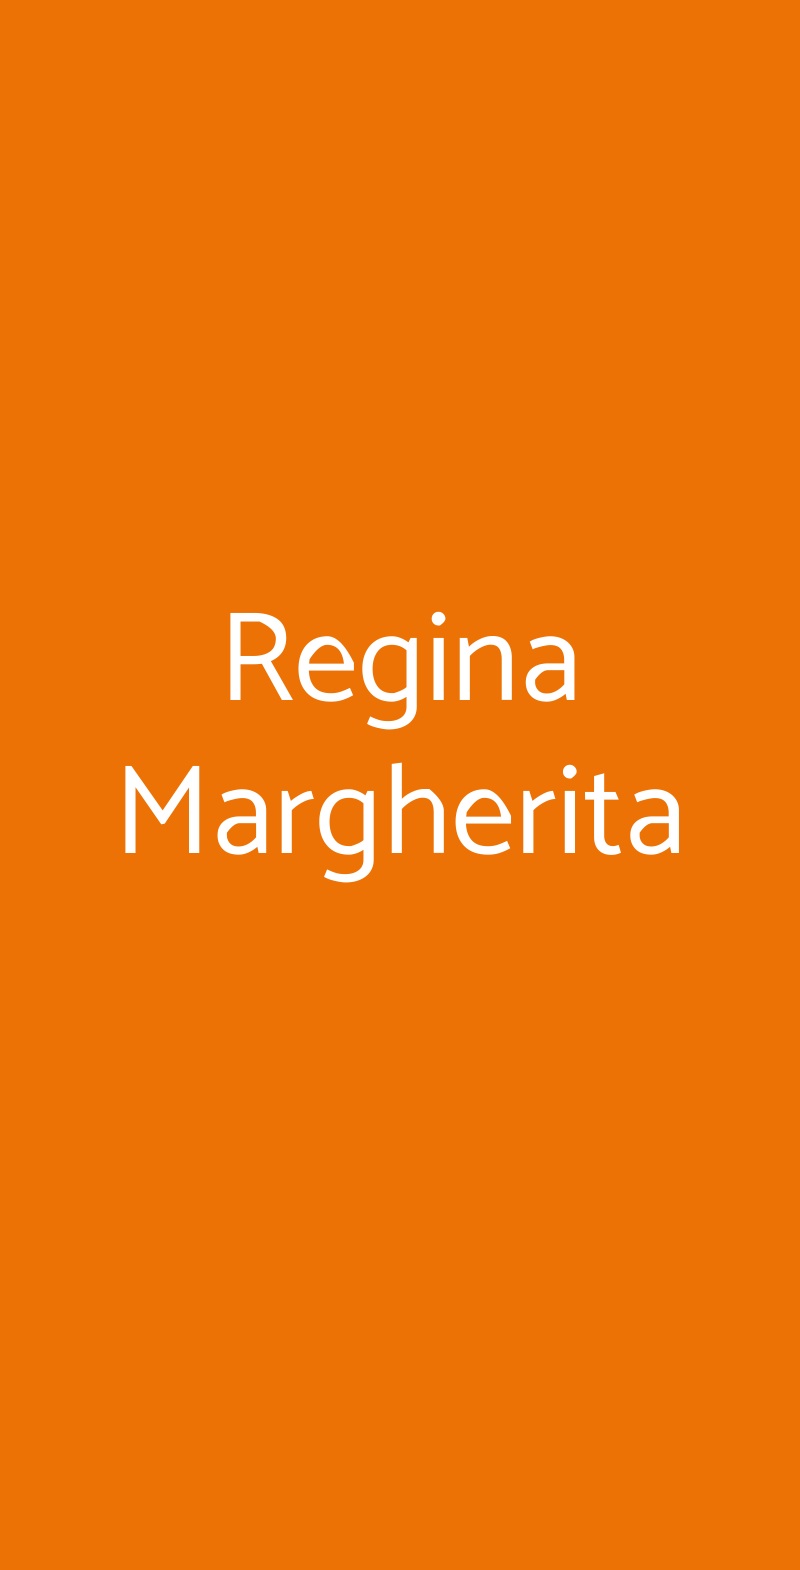 Regina Margherita Castelvetro di Modena menù 1 pagina